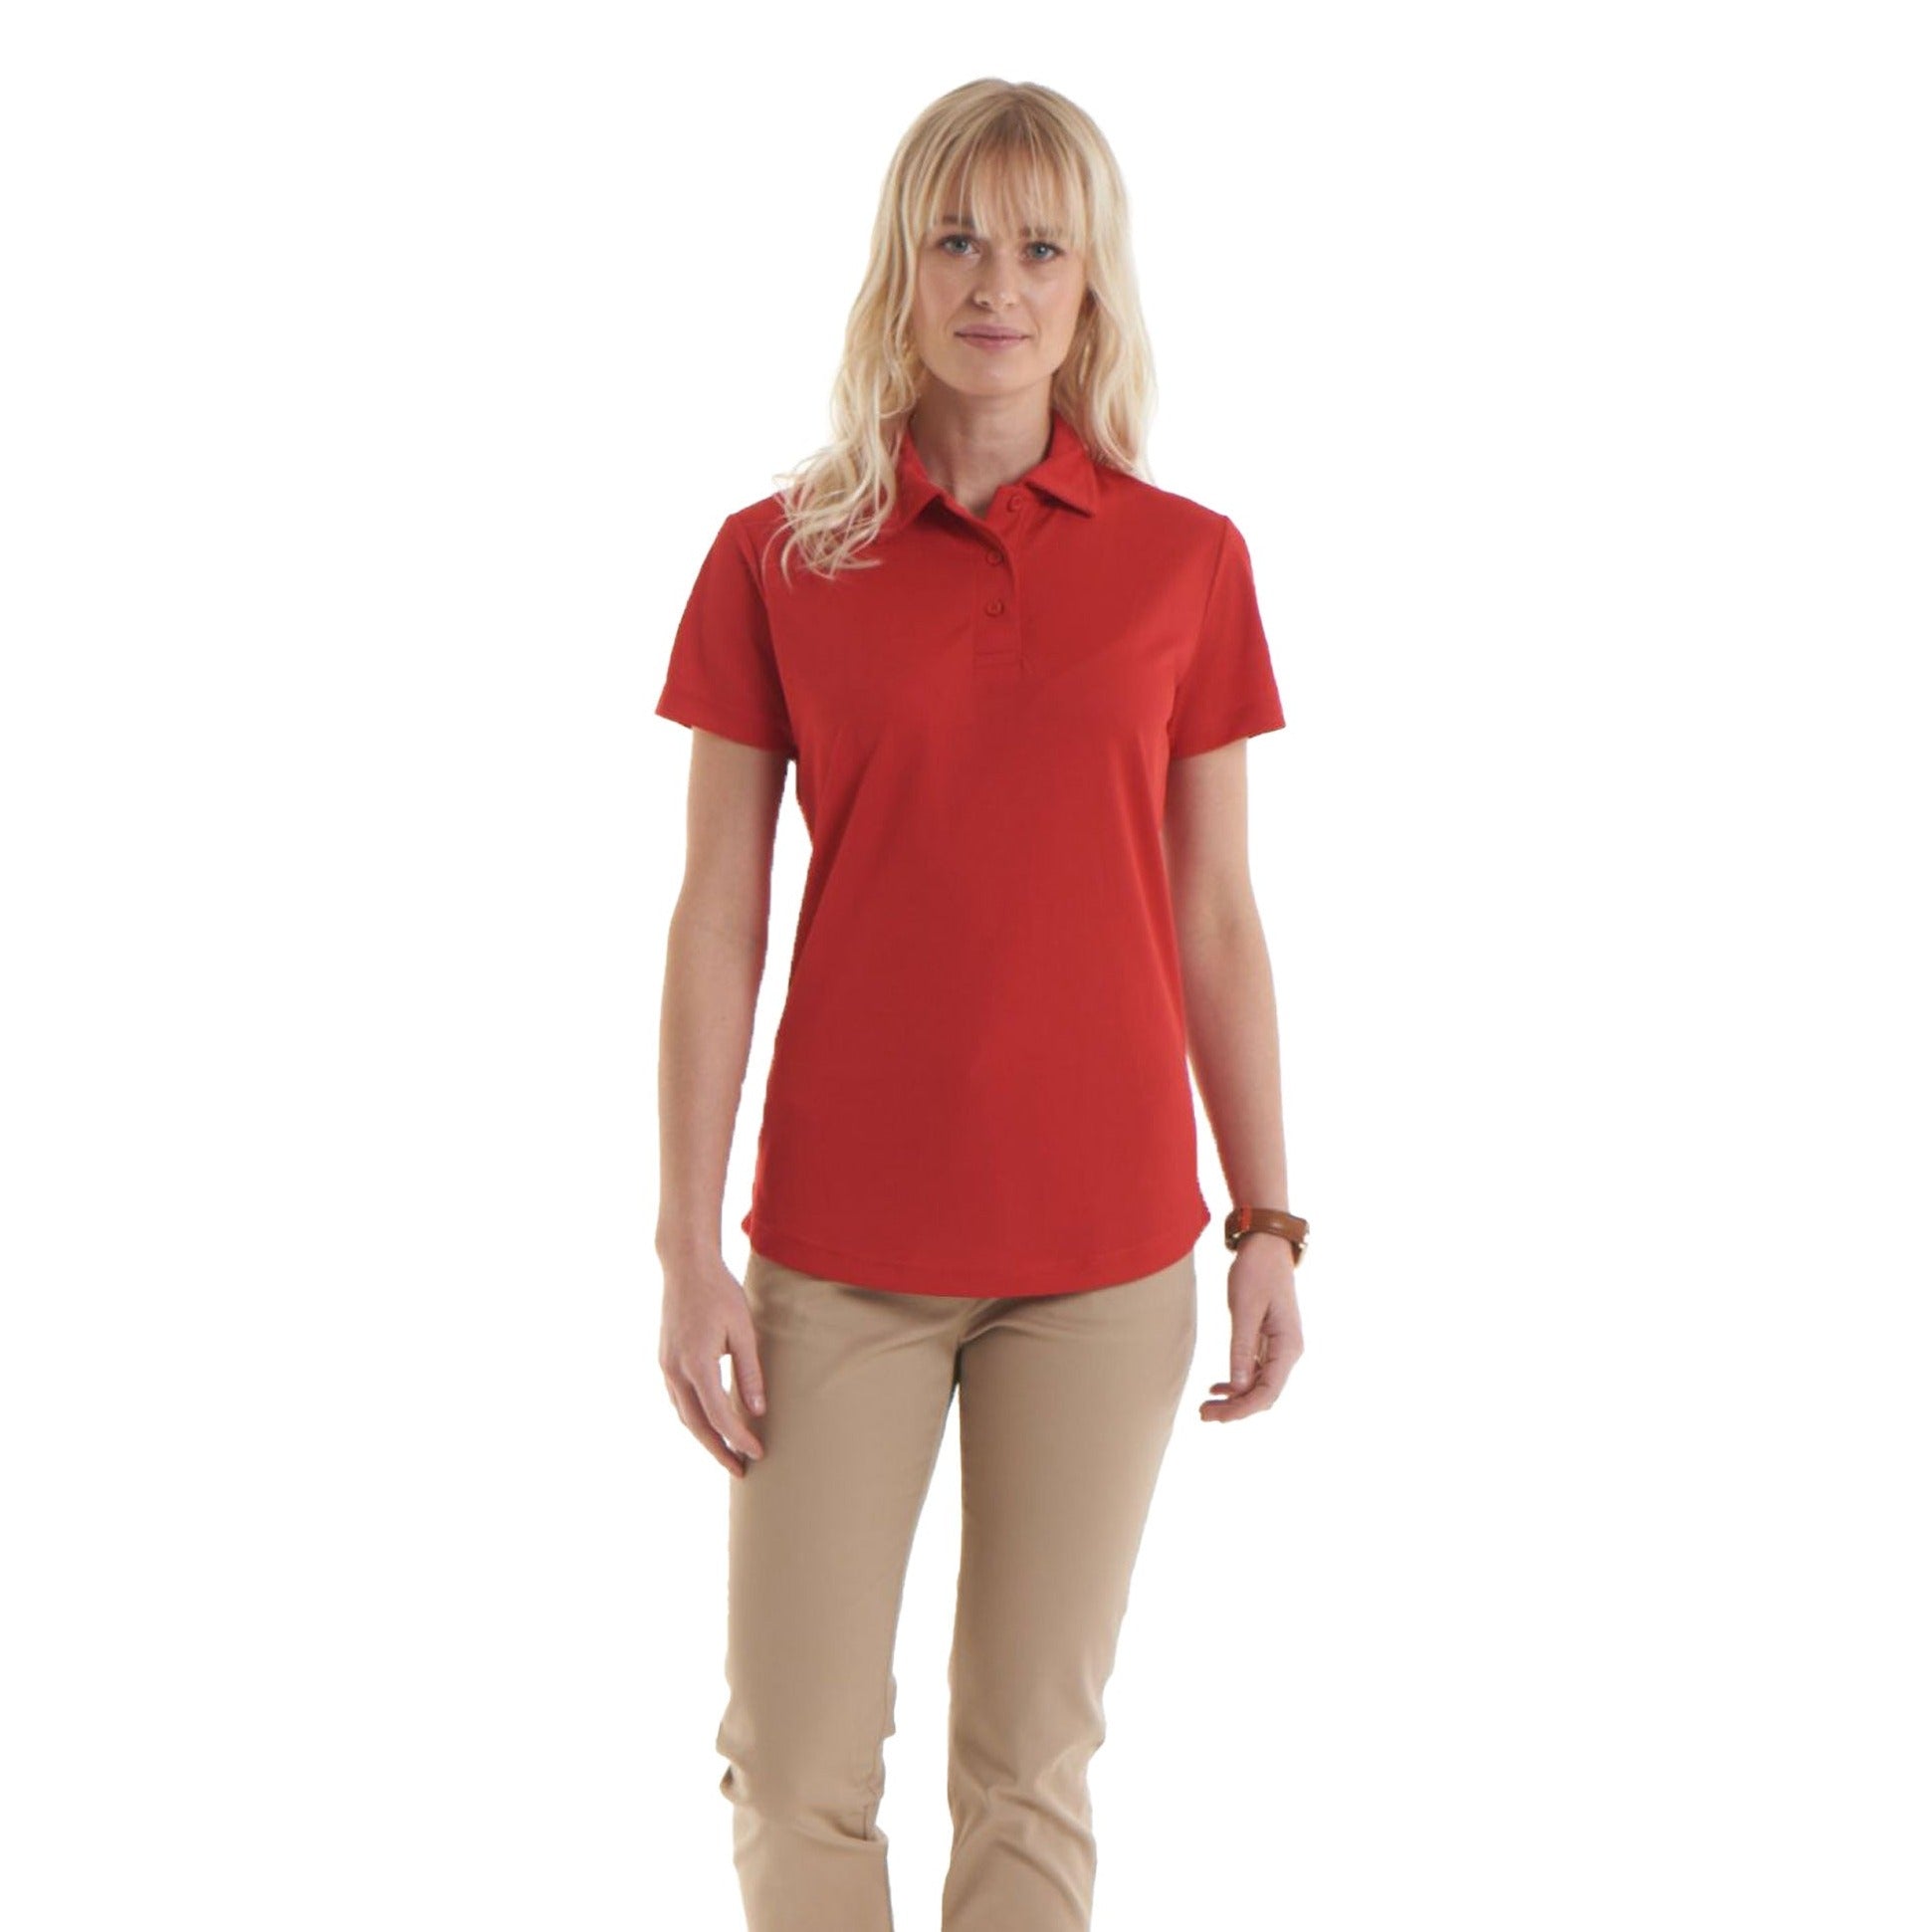 Uneek Ladies Ultra Cool Poloshirt UC126 - Red